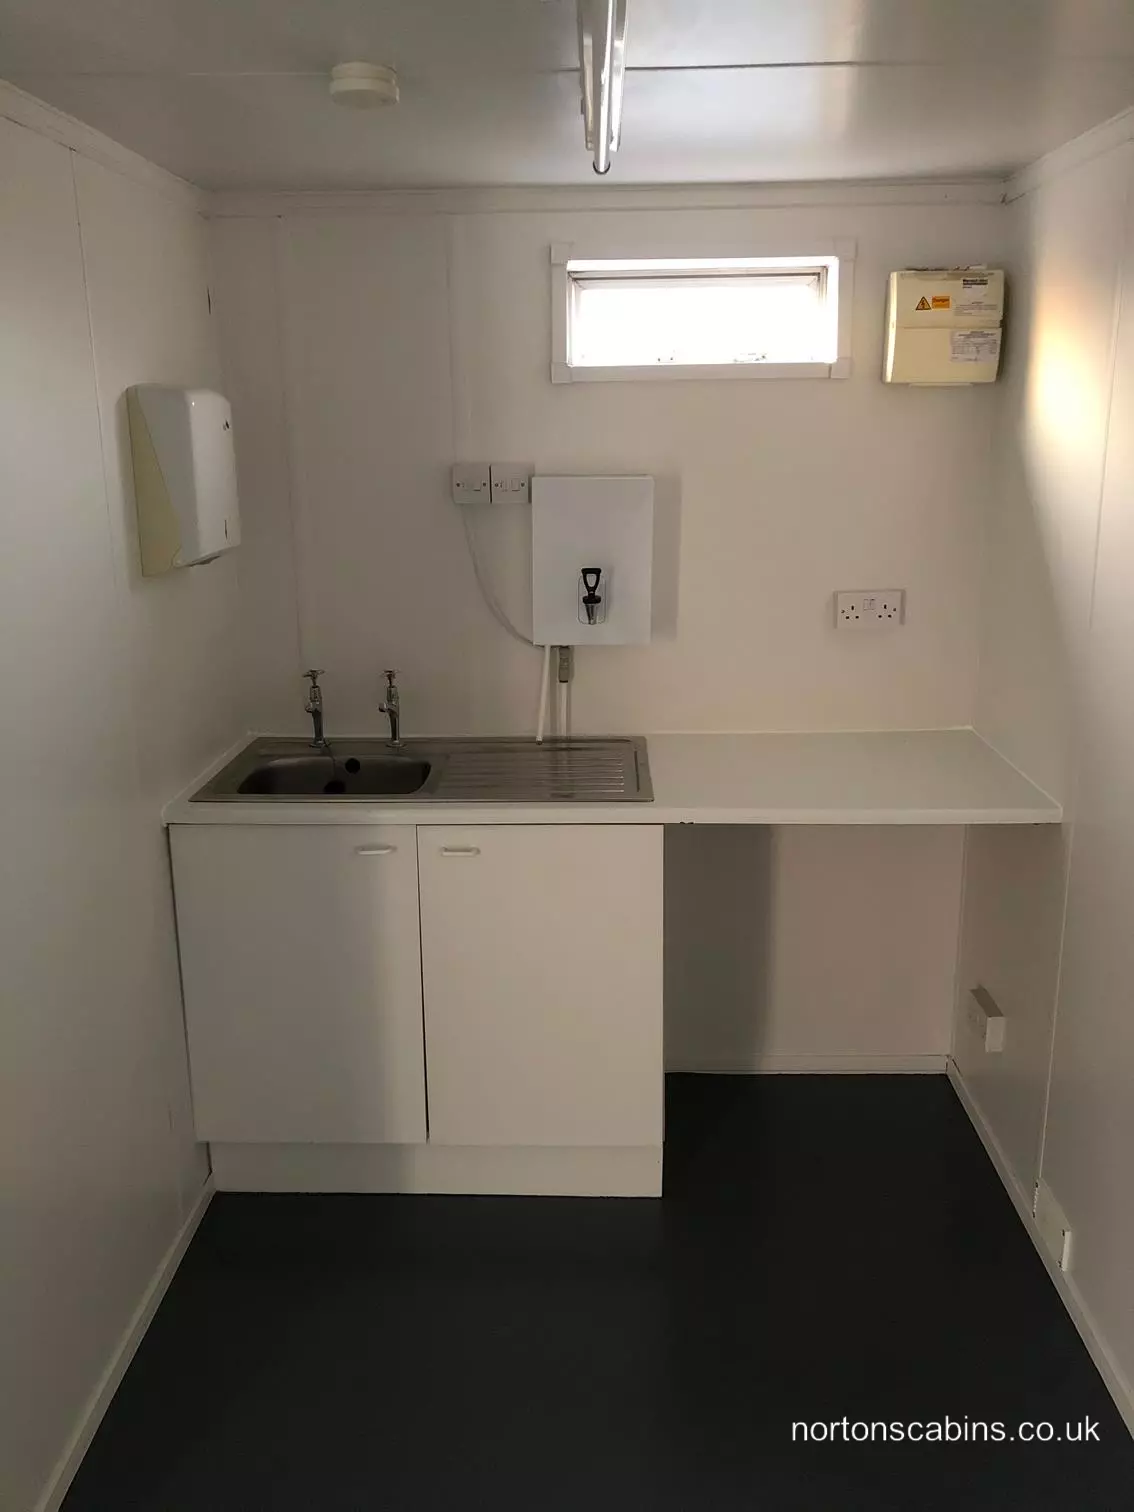 Ref: Nor247 32ftx10 AV  office kitchen £9,950 +VAT